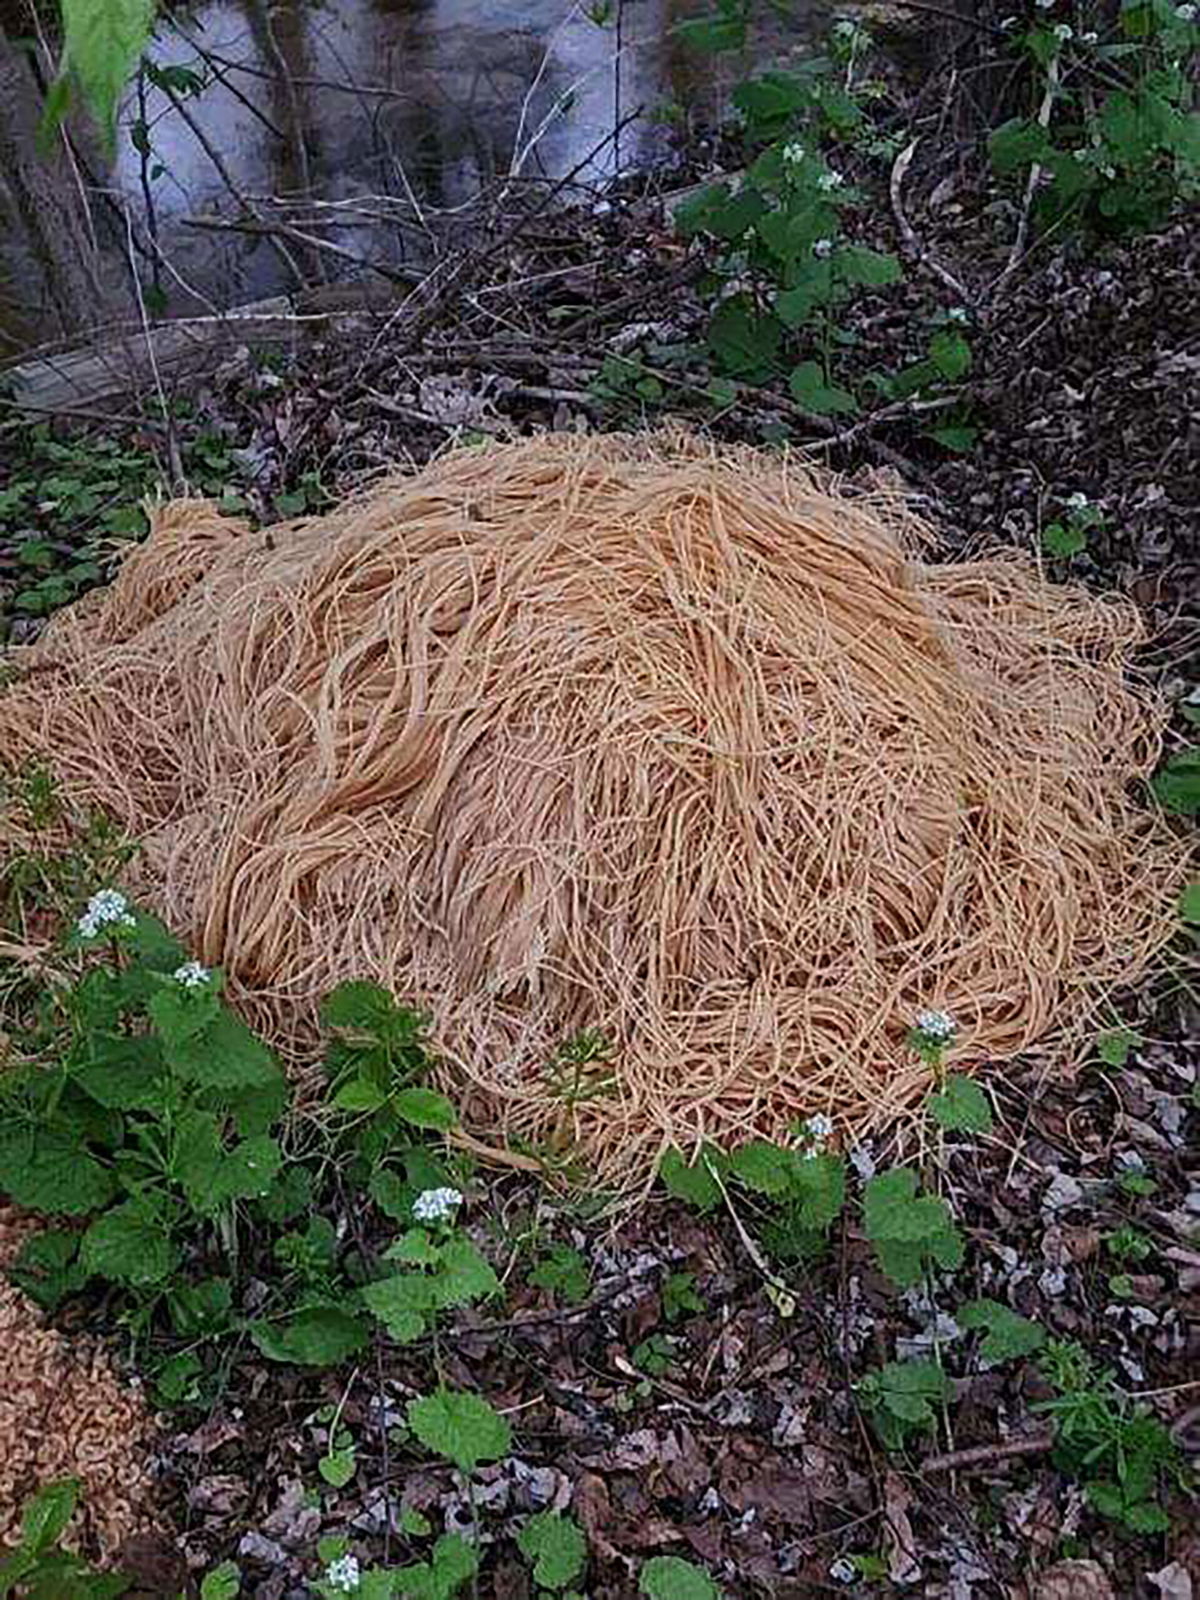 <i>Courtesy Nina Jochnowitz</i><br/>Uncooked spaghetti found along a stream in Old Bridge